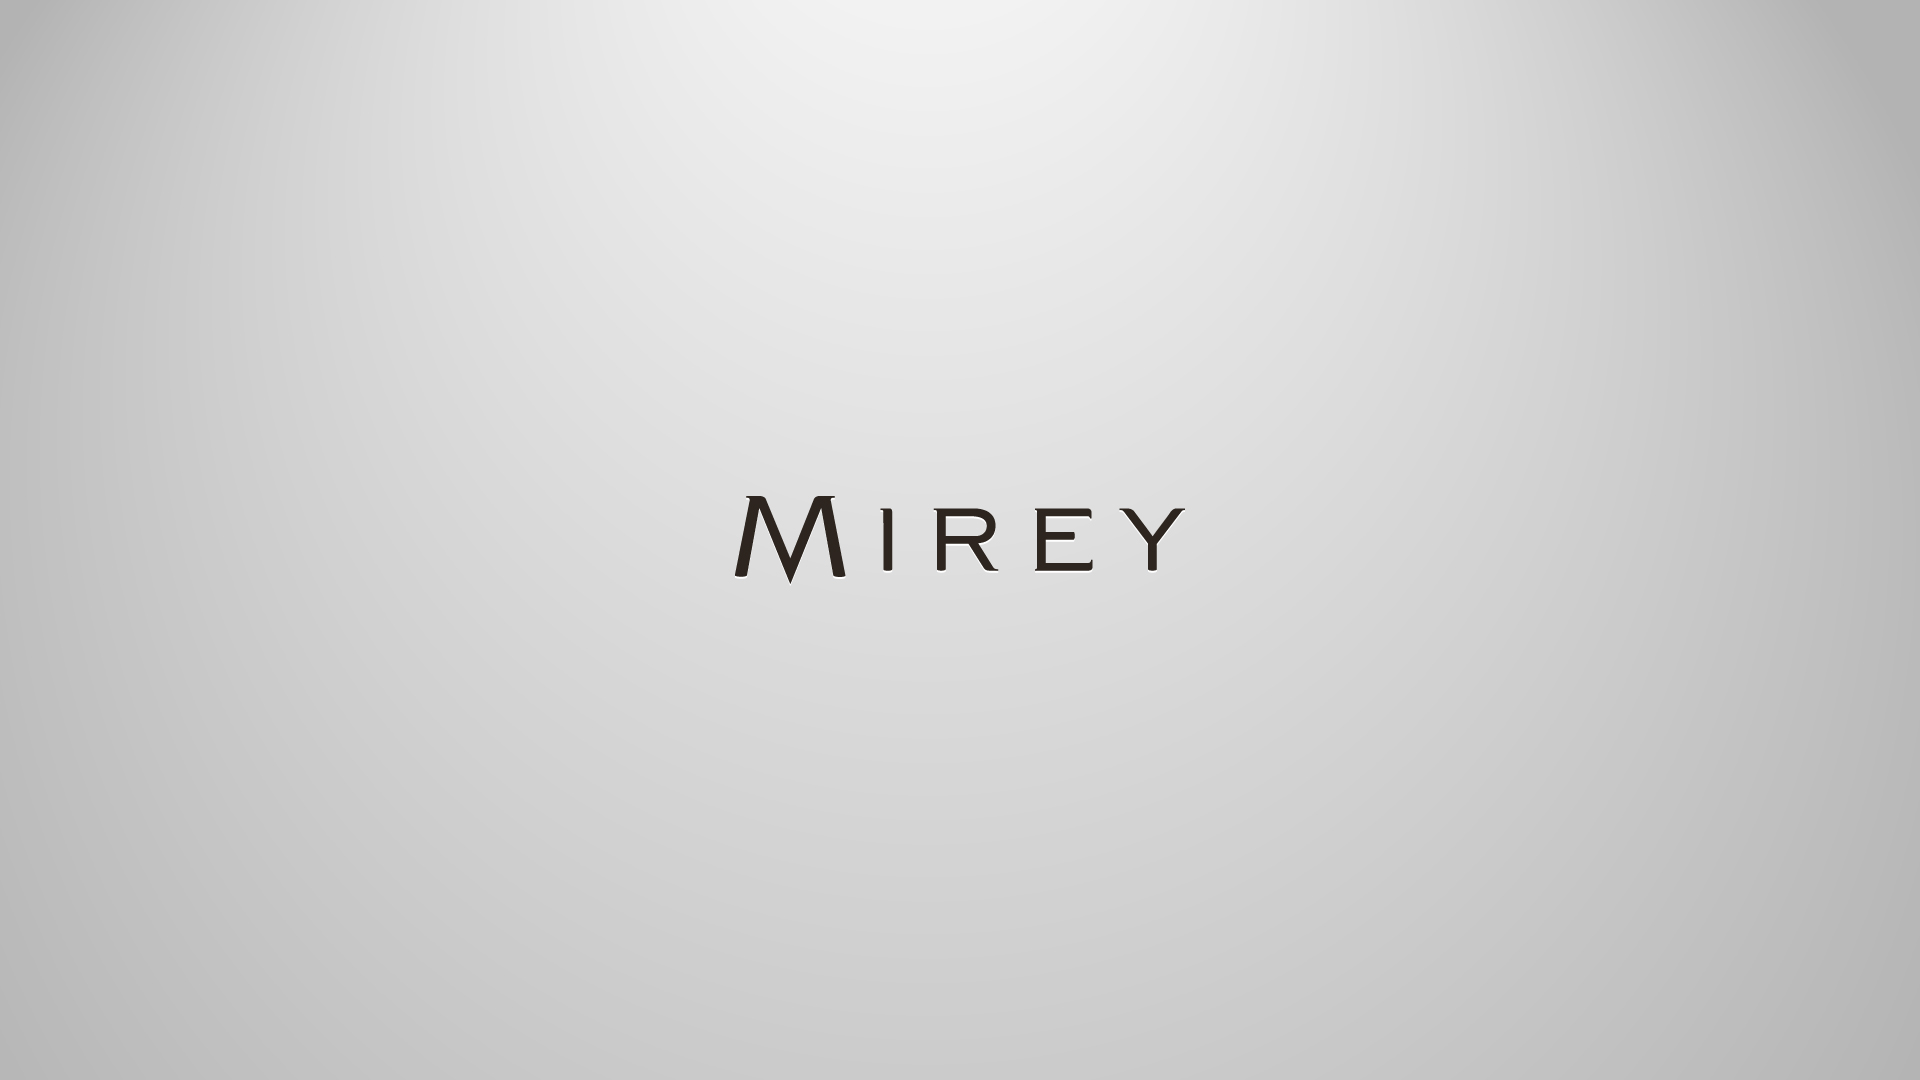 Mirey: Hosiery, Underwear and Artic Box